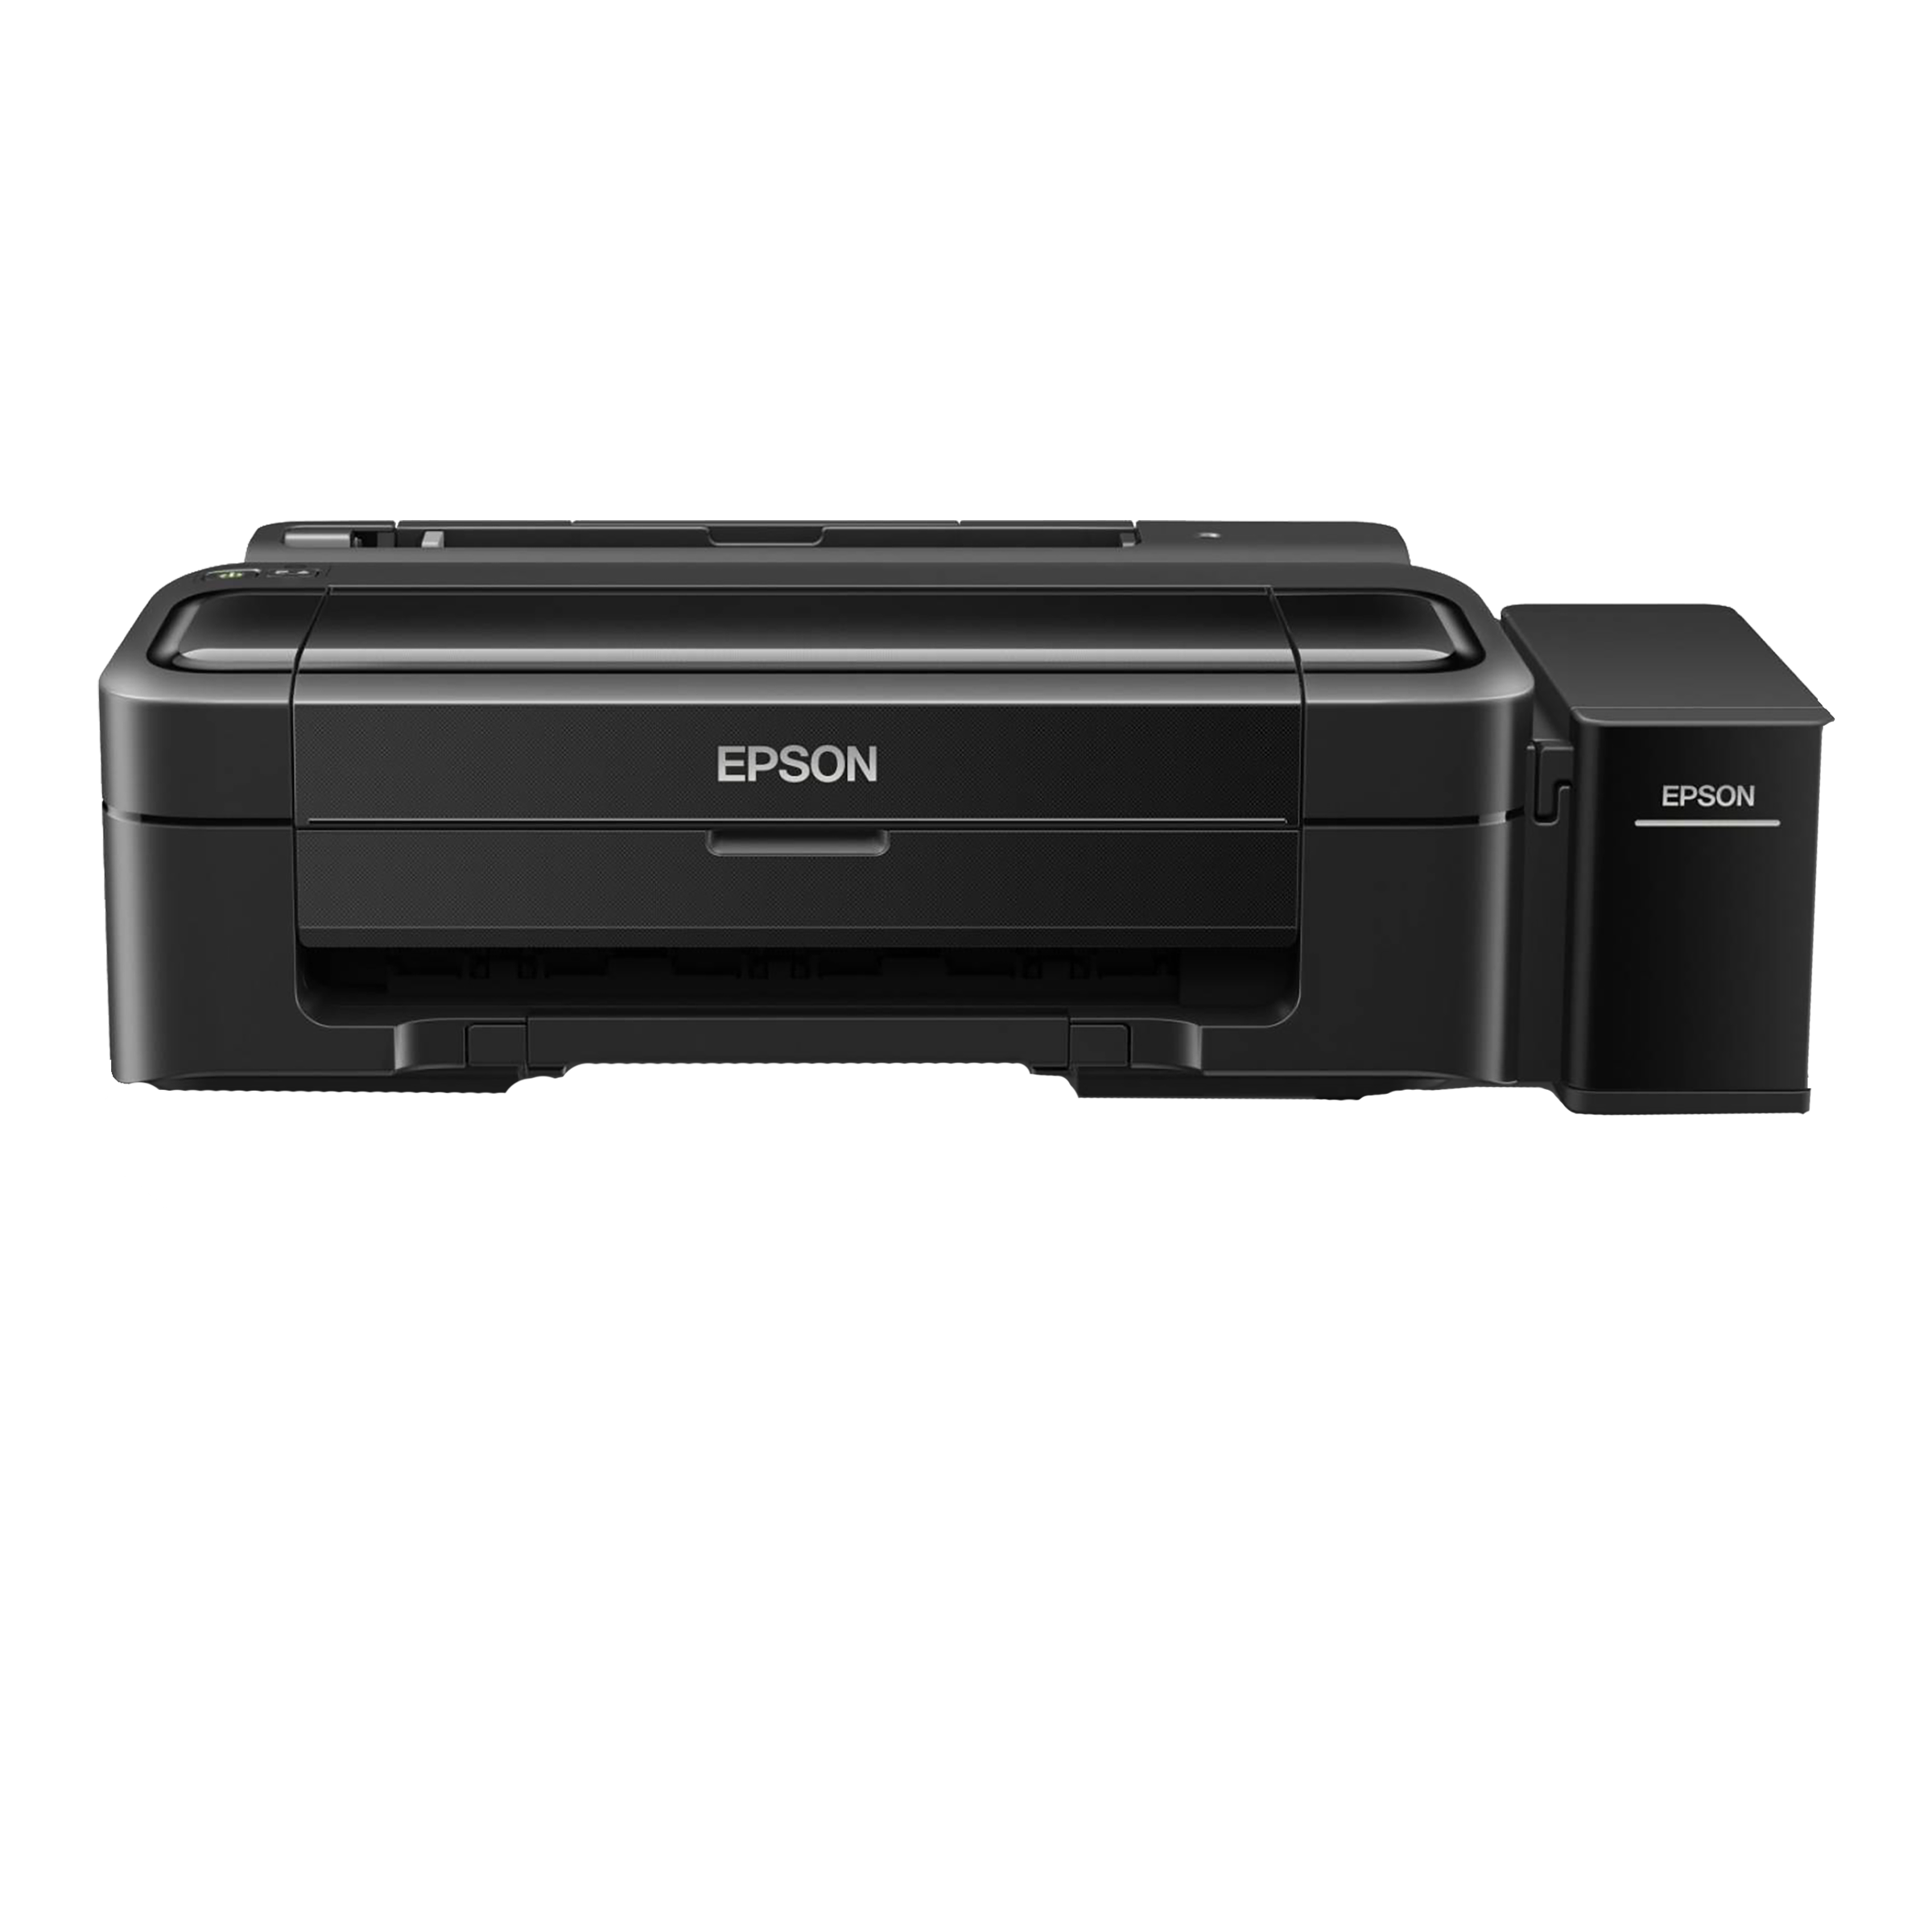 EPSON EcoTank L130 Colour Ink Tank Printer (Impressive Print Speed, C11CE58501, Black)